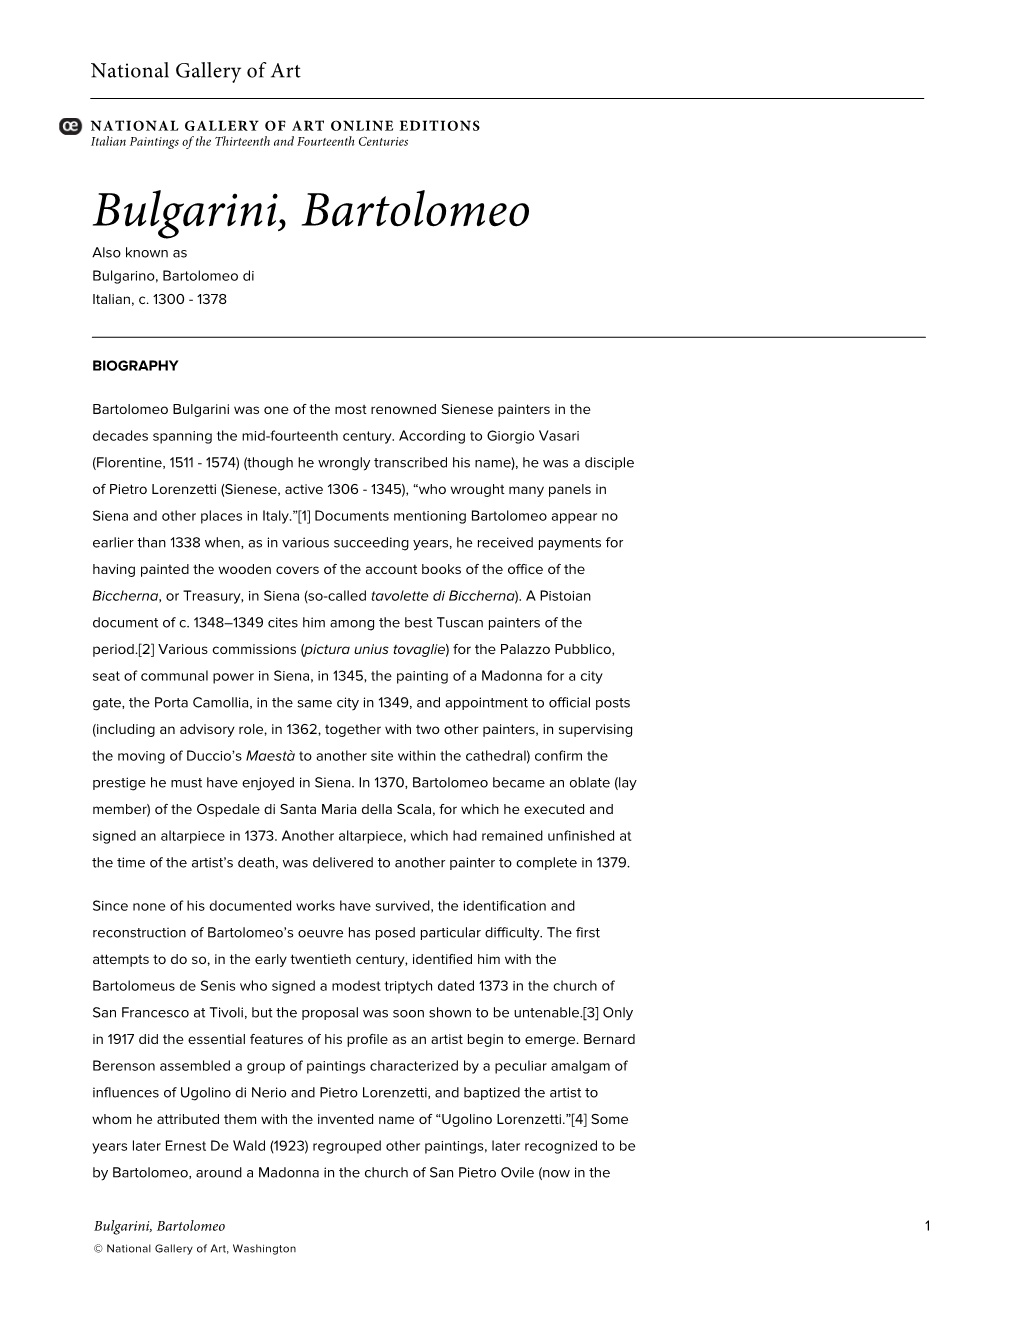 Bulgarini, Bartolomeo Also Known As Bulgarino, Bartolomeo Di Italian, C